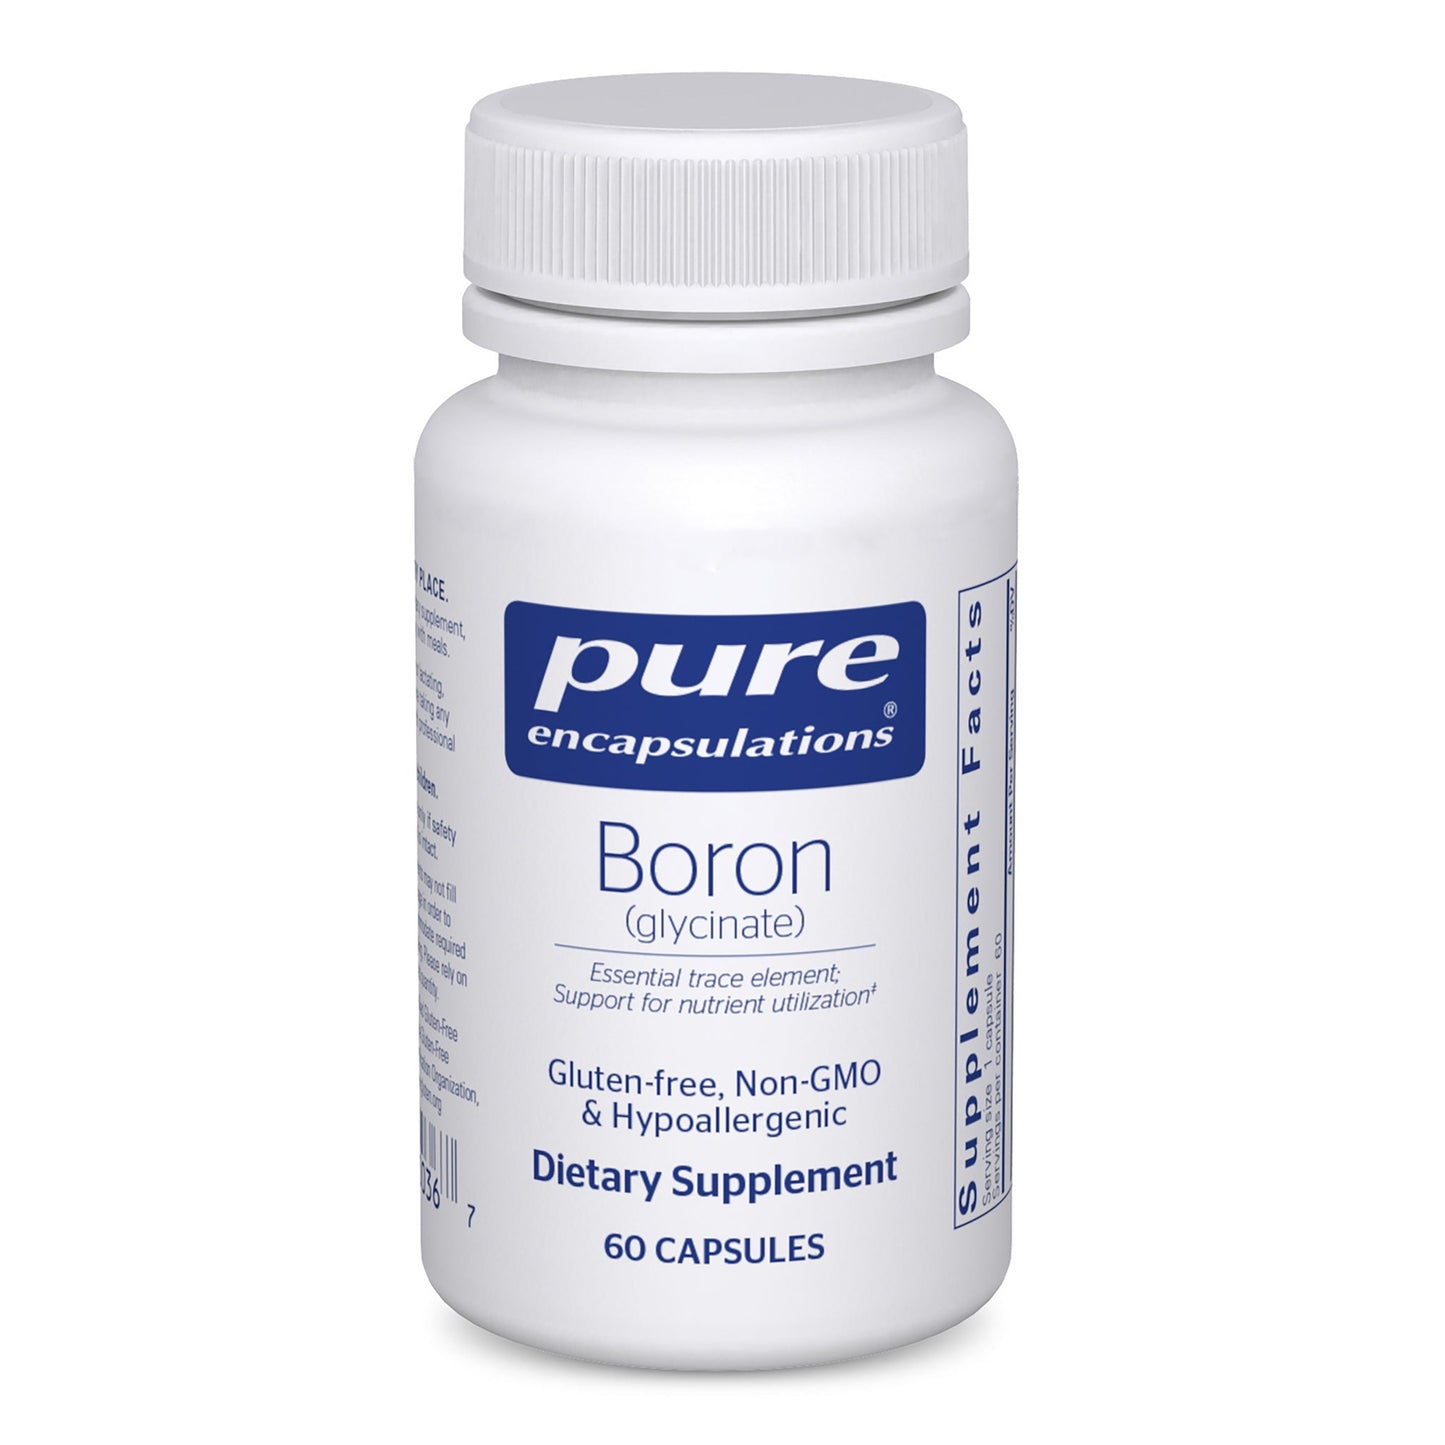 Boron (glycinate)